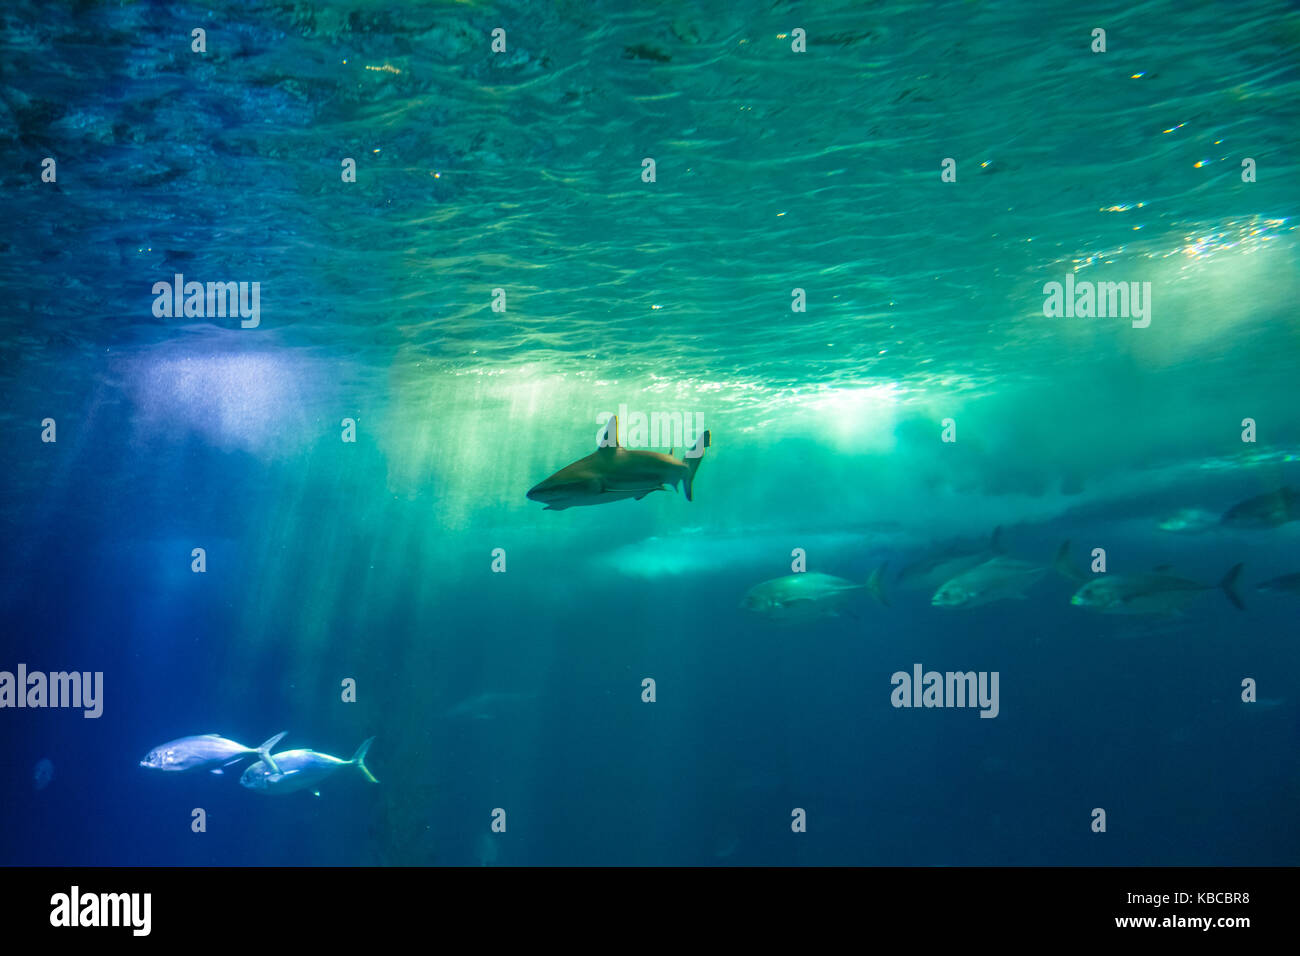 Undersea scene background Stock Photo